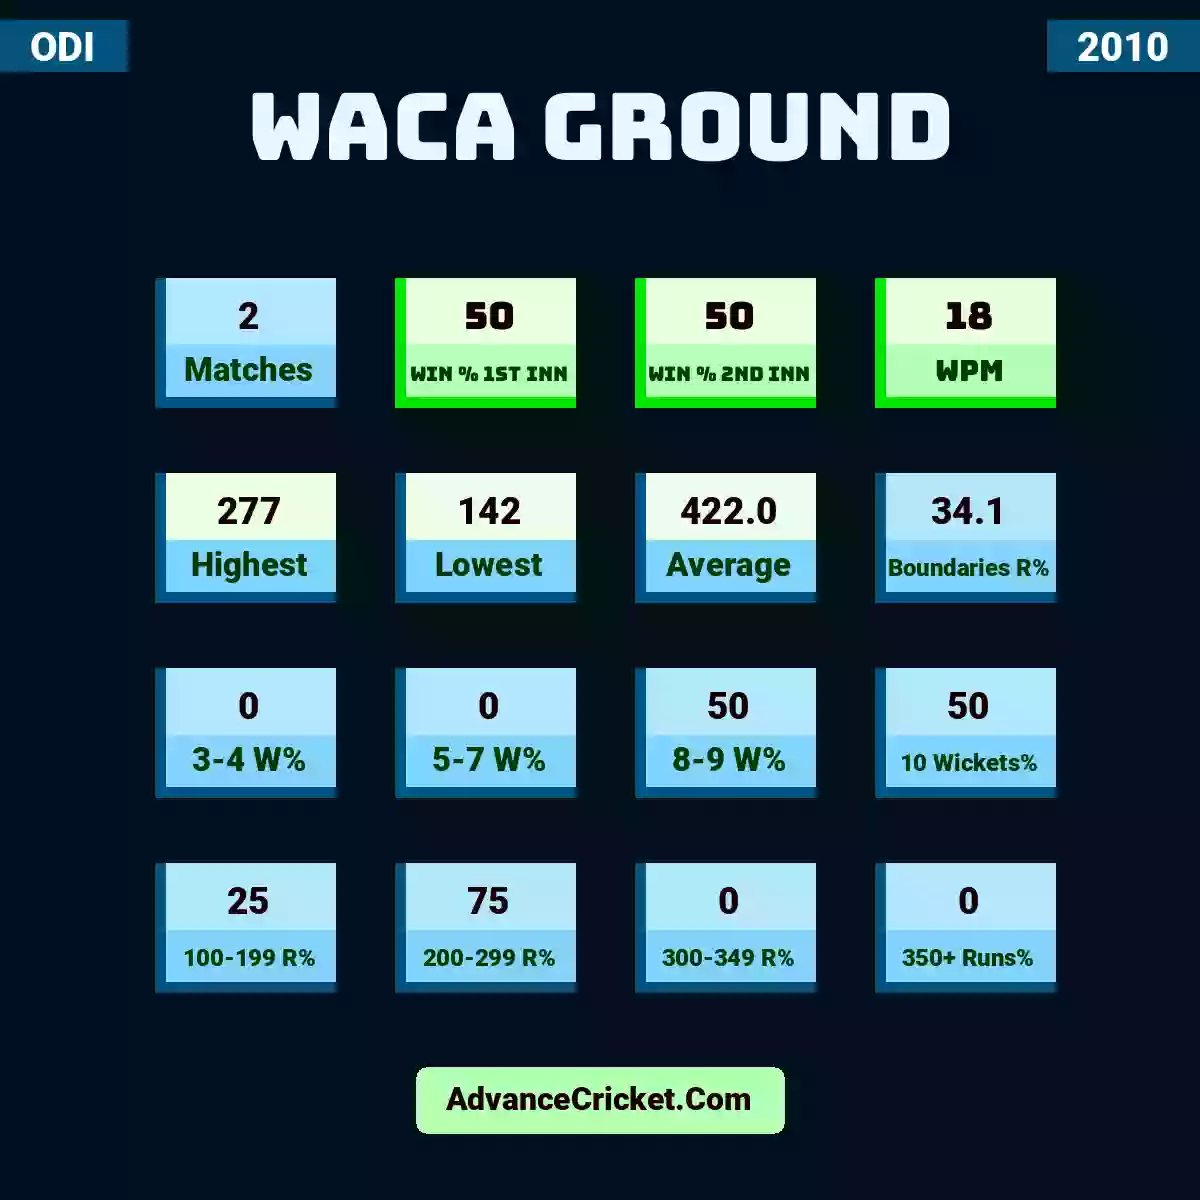 Image showing WACA Ground with Matches: 2, Win % 1st Inn: 50, Win % 2nd Inn: 50, WPM: 18, Highest: 277, Lowest: 142, Average: 422.0, Boundaries R%: 34.1, 3-4 W%: 0, 5-7 W%: 0, 8-9 W%: 50, 10 Wickets%: 50, 100-199 R%: 25, 200-299 R%: 75, 300-349 R%: 0, 350+ Runs%: 0.